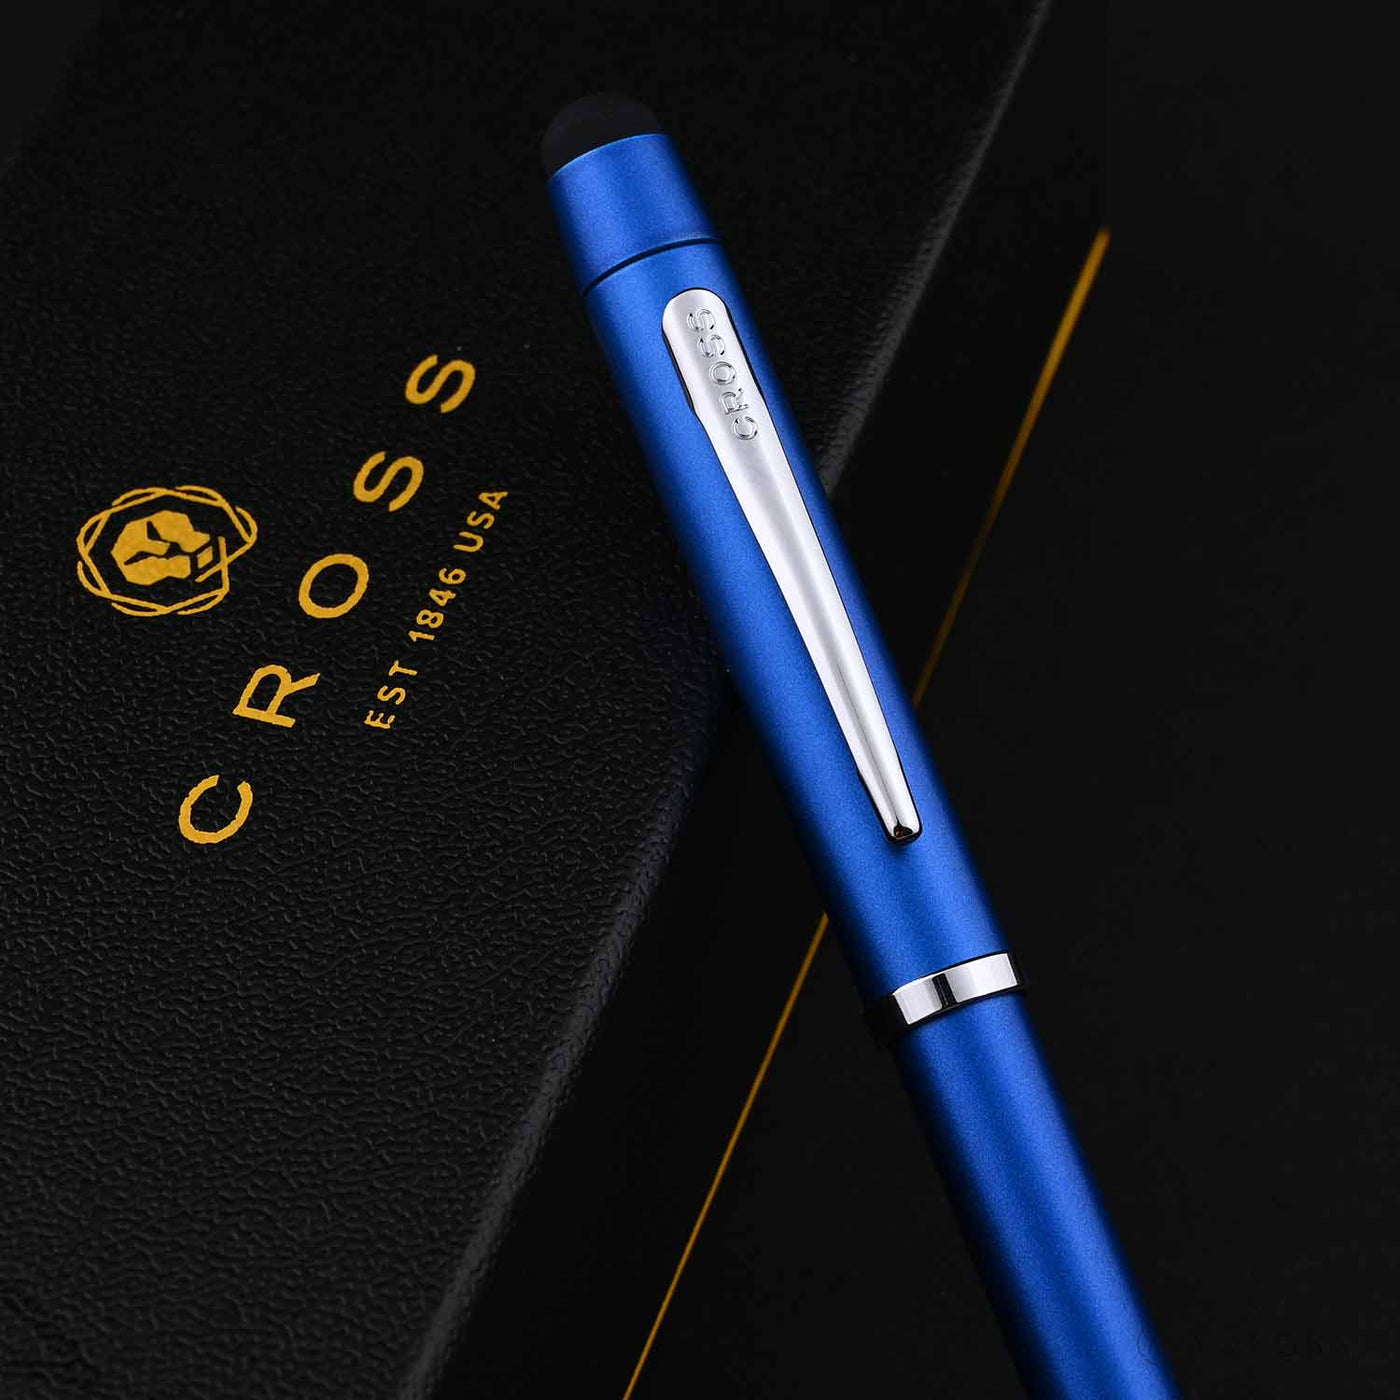 Cross Tech3 Multifunction Ball Pen - Metallic Blue CT 5